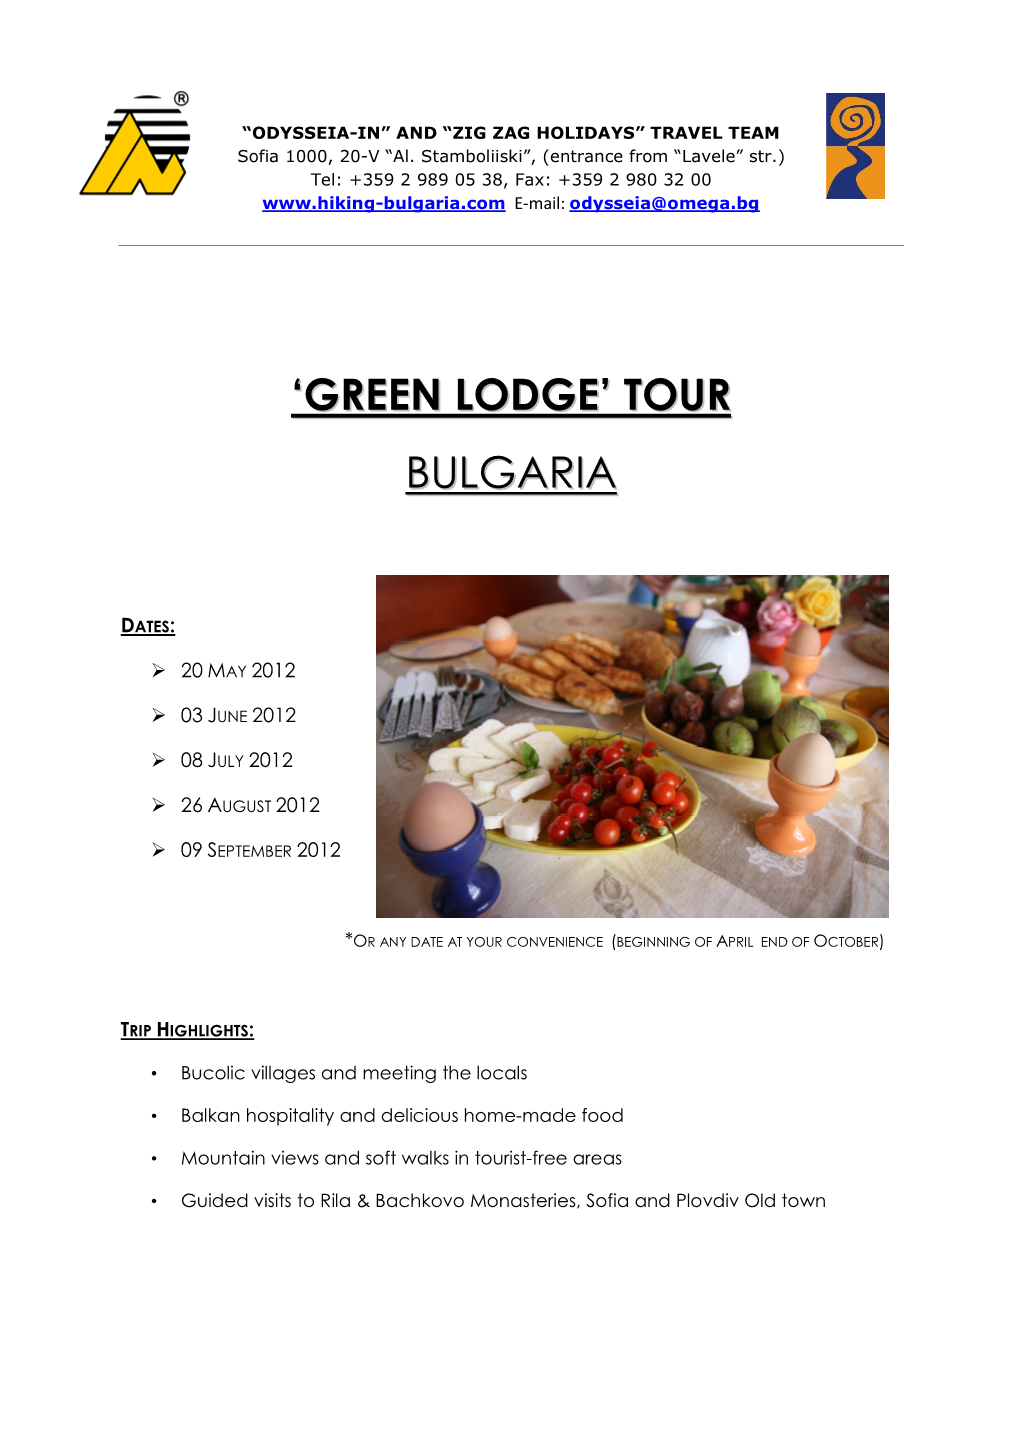 Green Lodge Tour